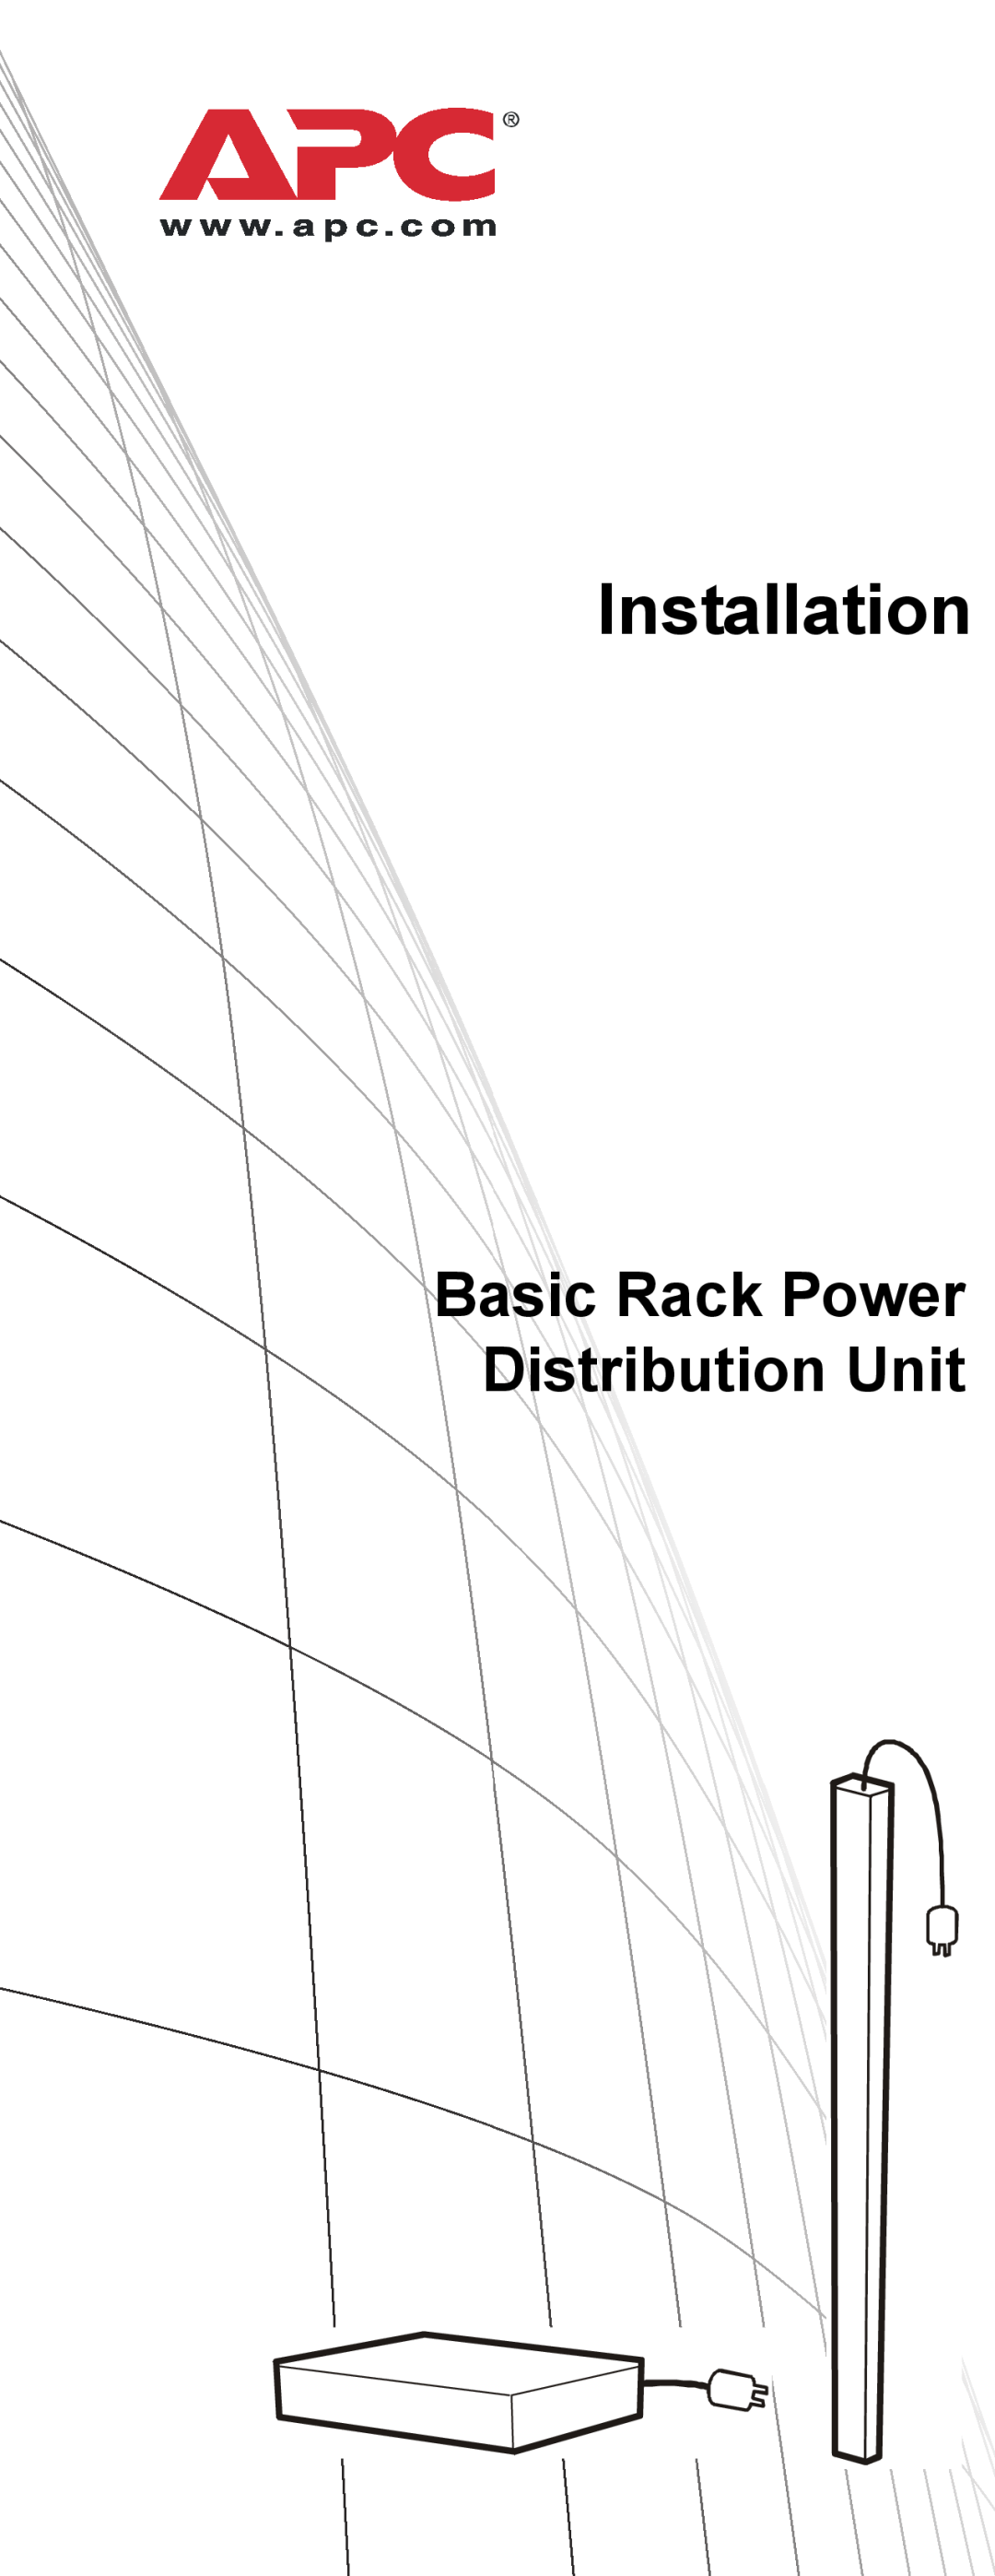 APC AP7592, AP7564, pdu0344a, pdu0190b manual Installation, Basic Rack Power Distribution Unit 